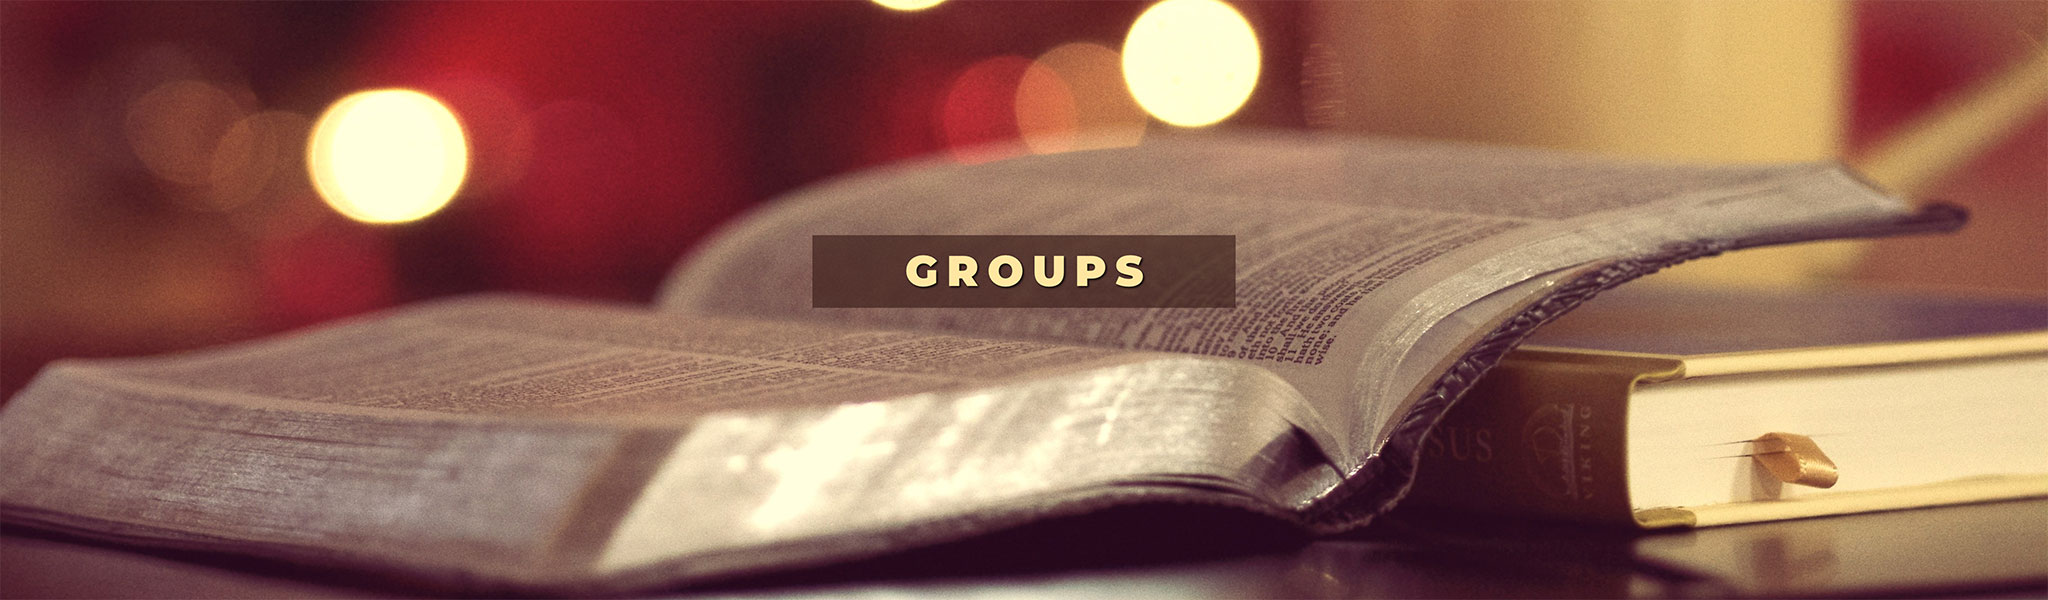 Journey Christian Church - Groups